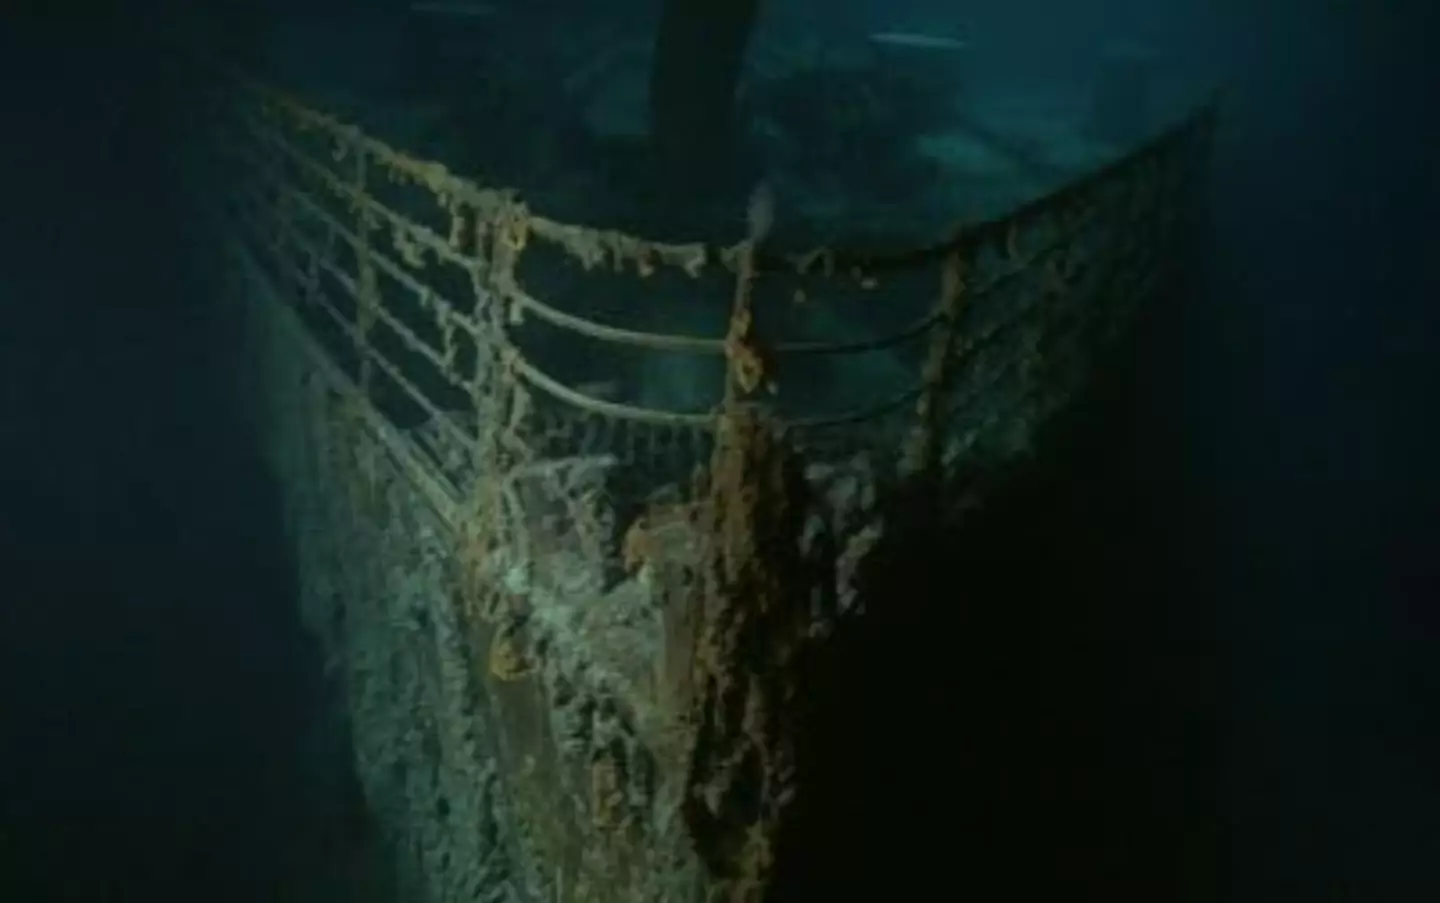 The Titanic sunk in 1912.